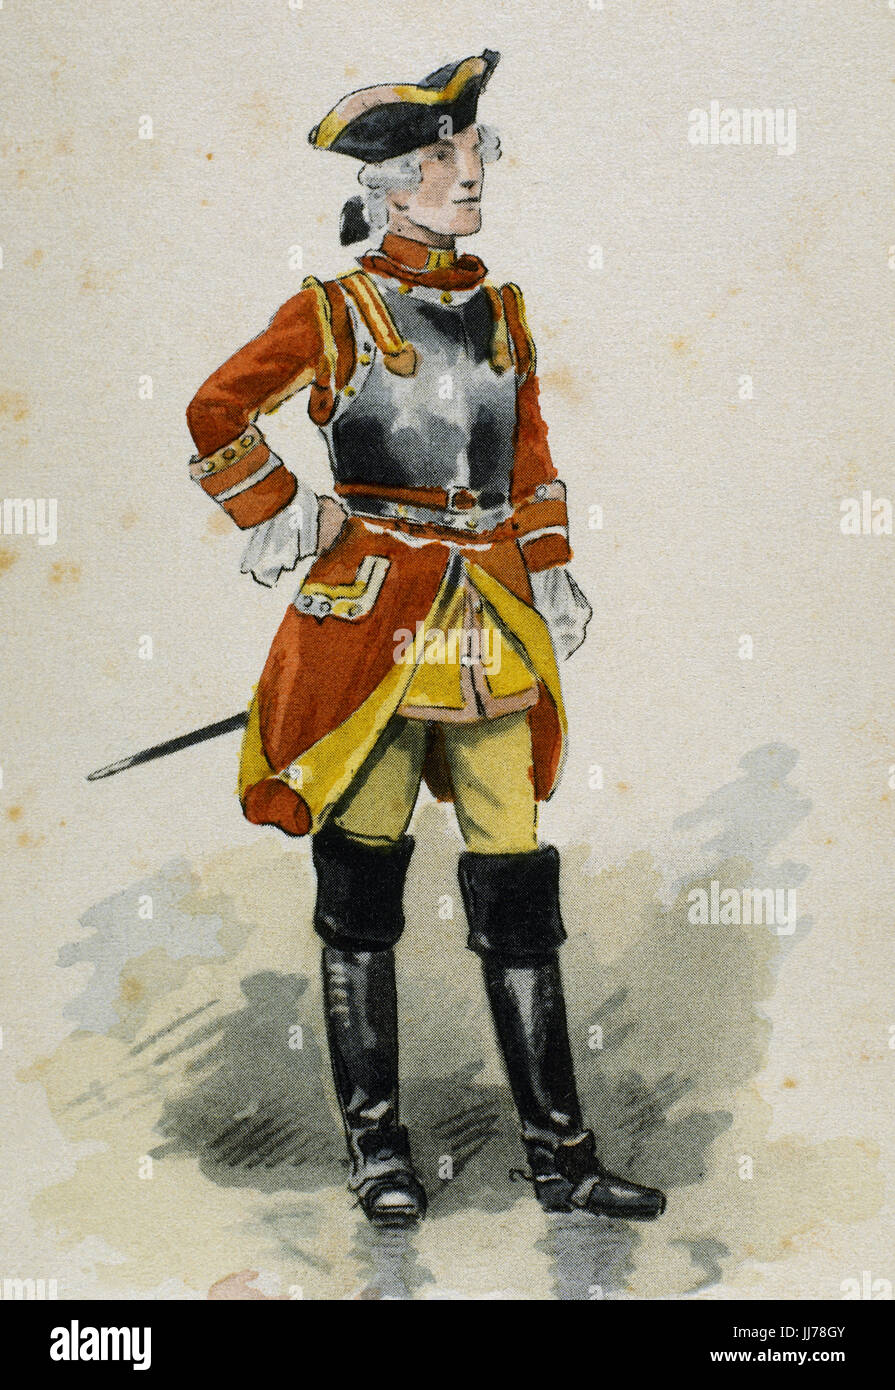 Spanish Army Uniform 18th Century - Army Military